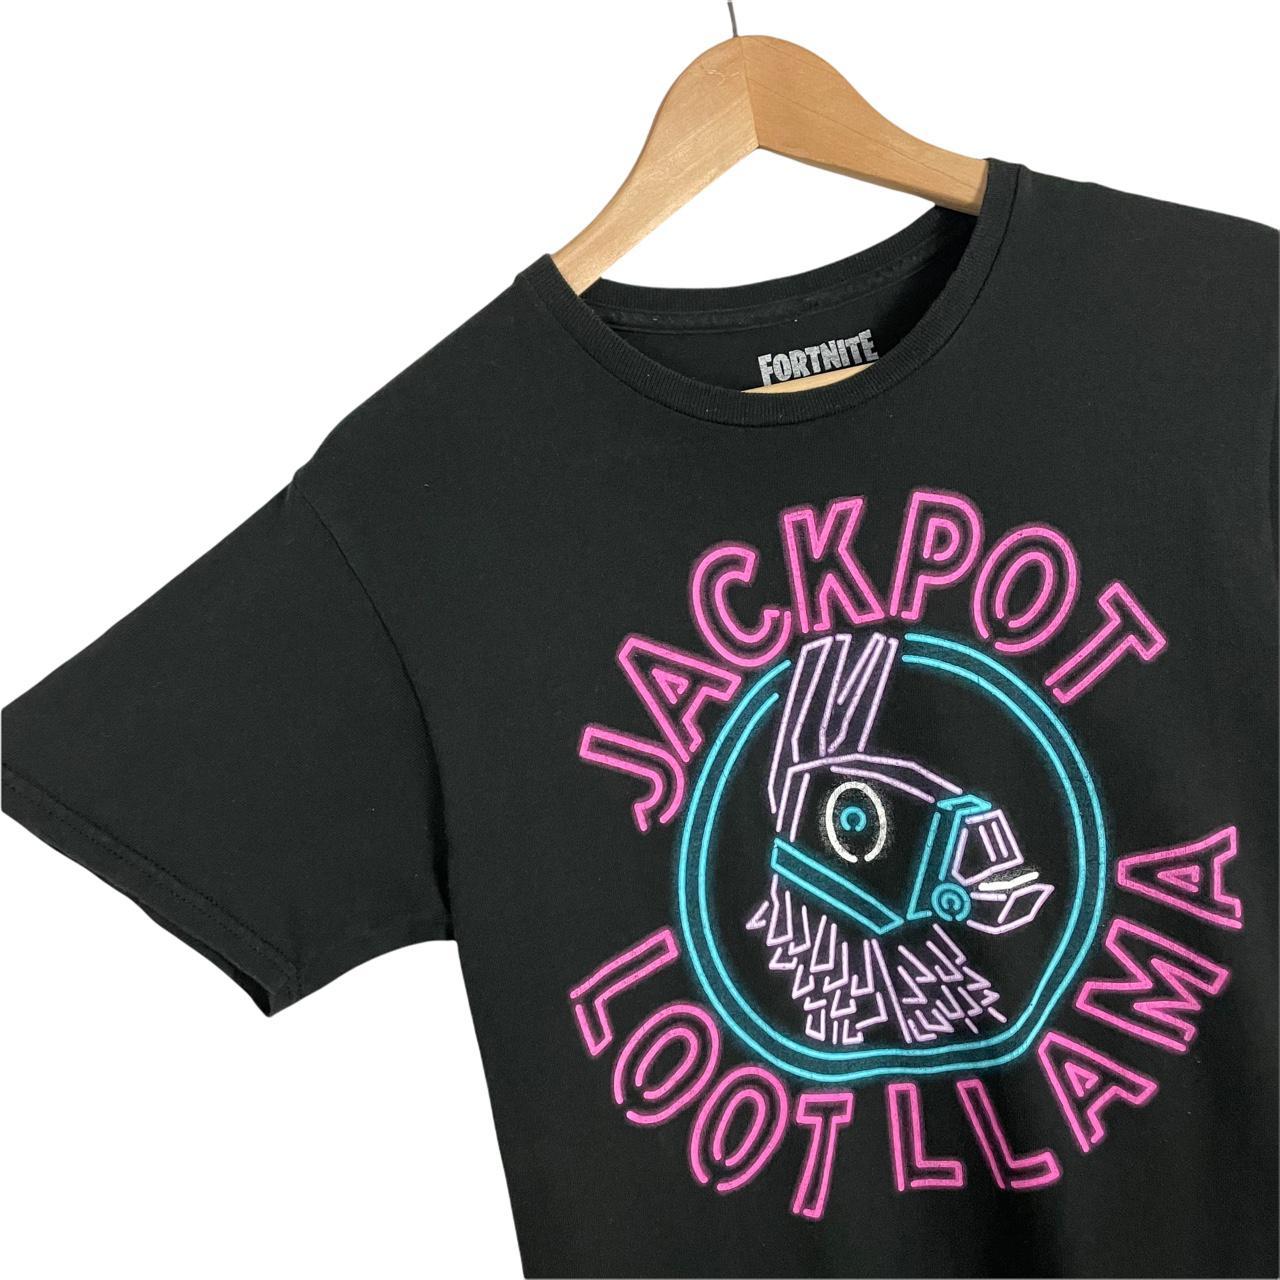 Product Image 2 - Fortnite Jackpot Loot Llama T-Shirt
•